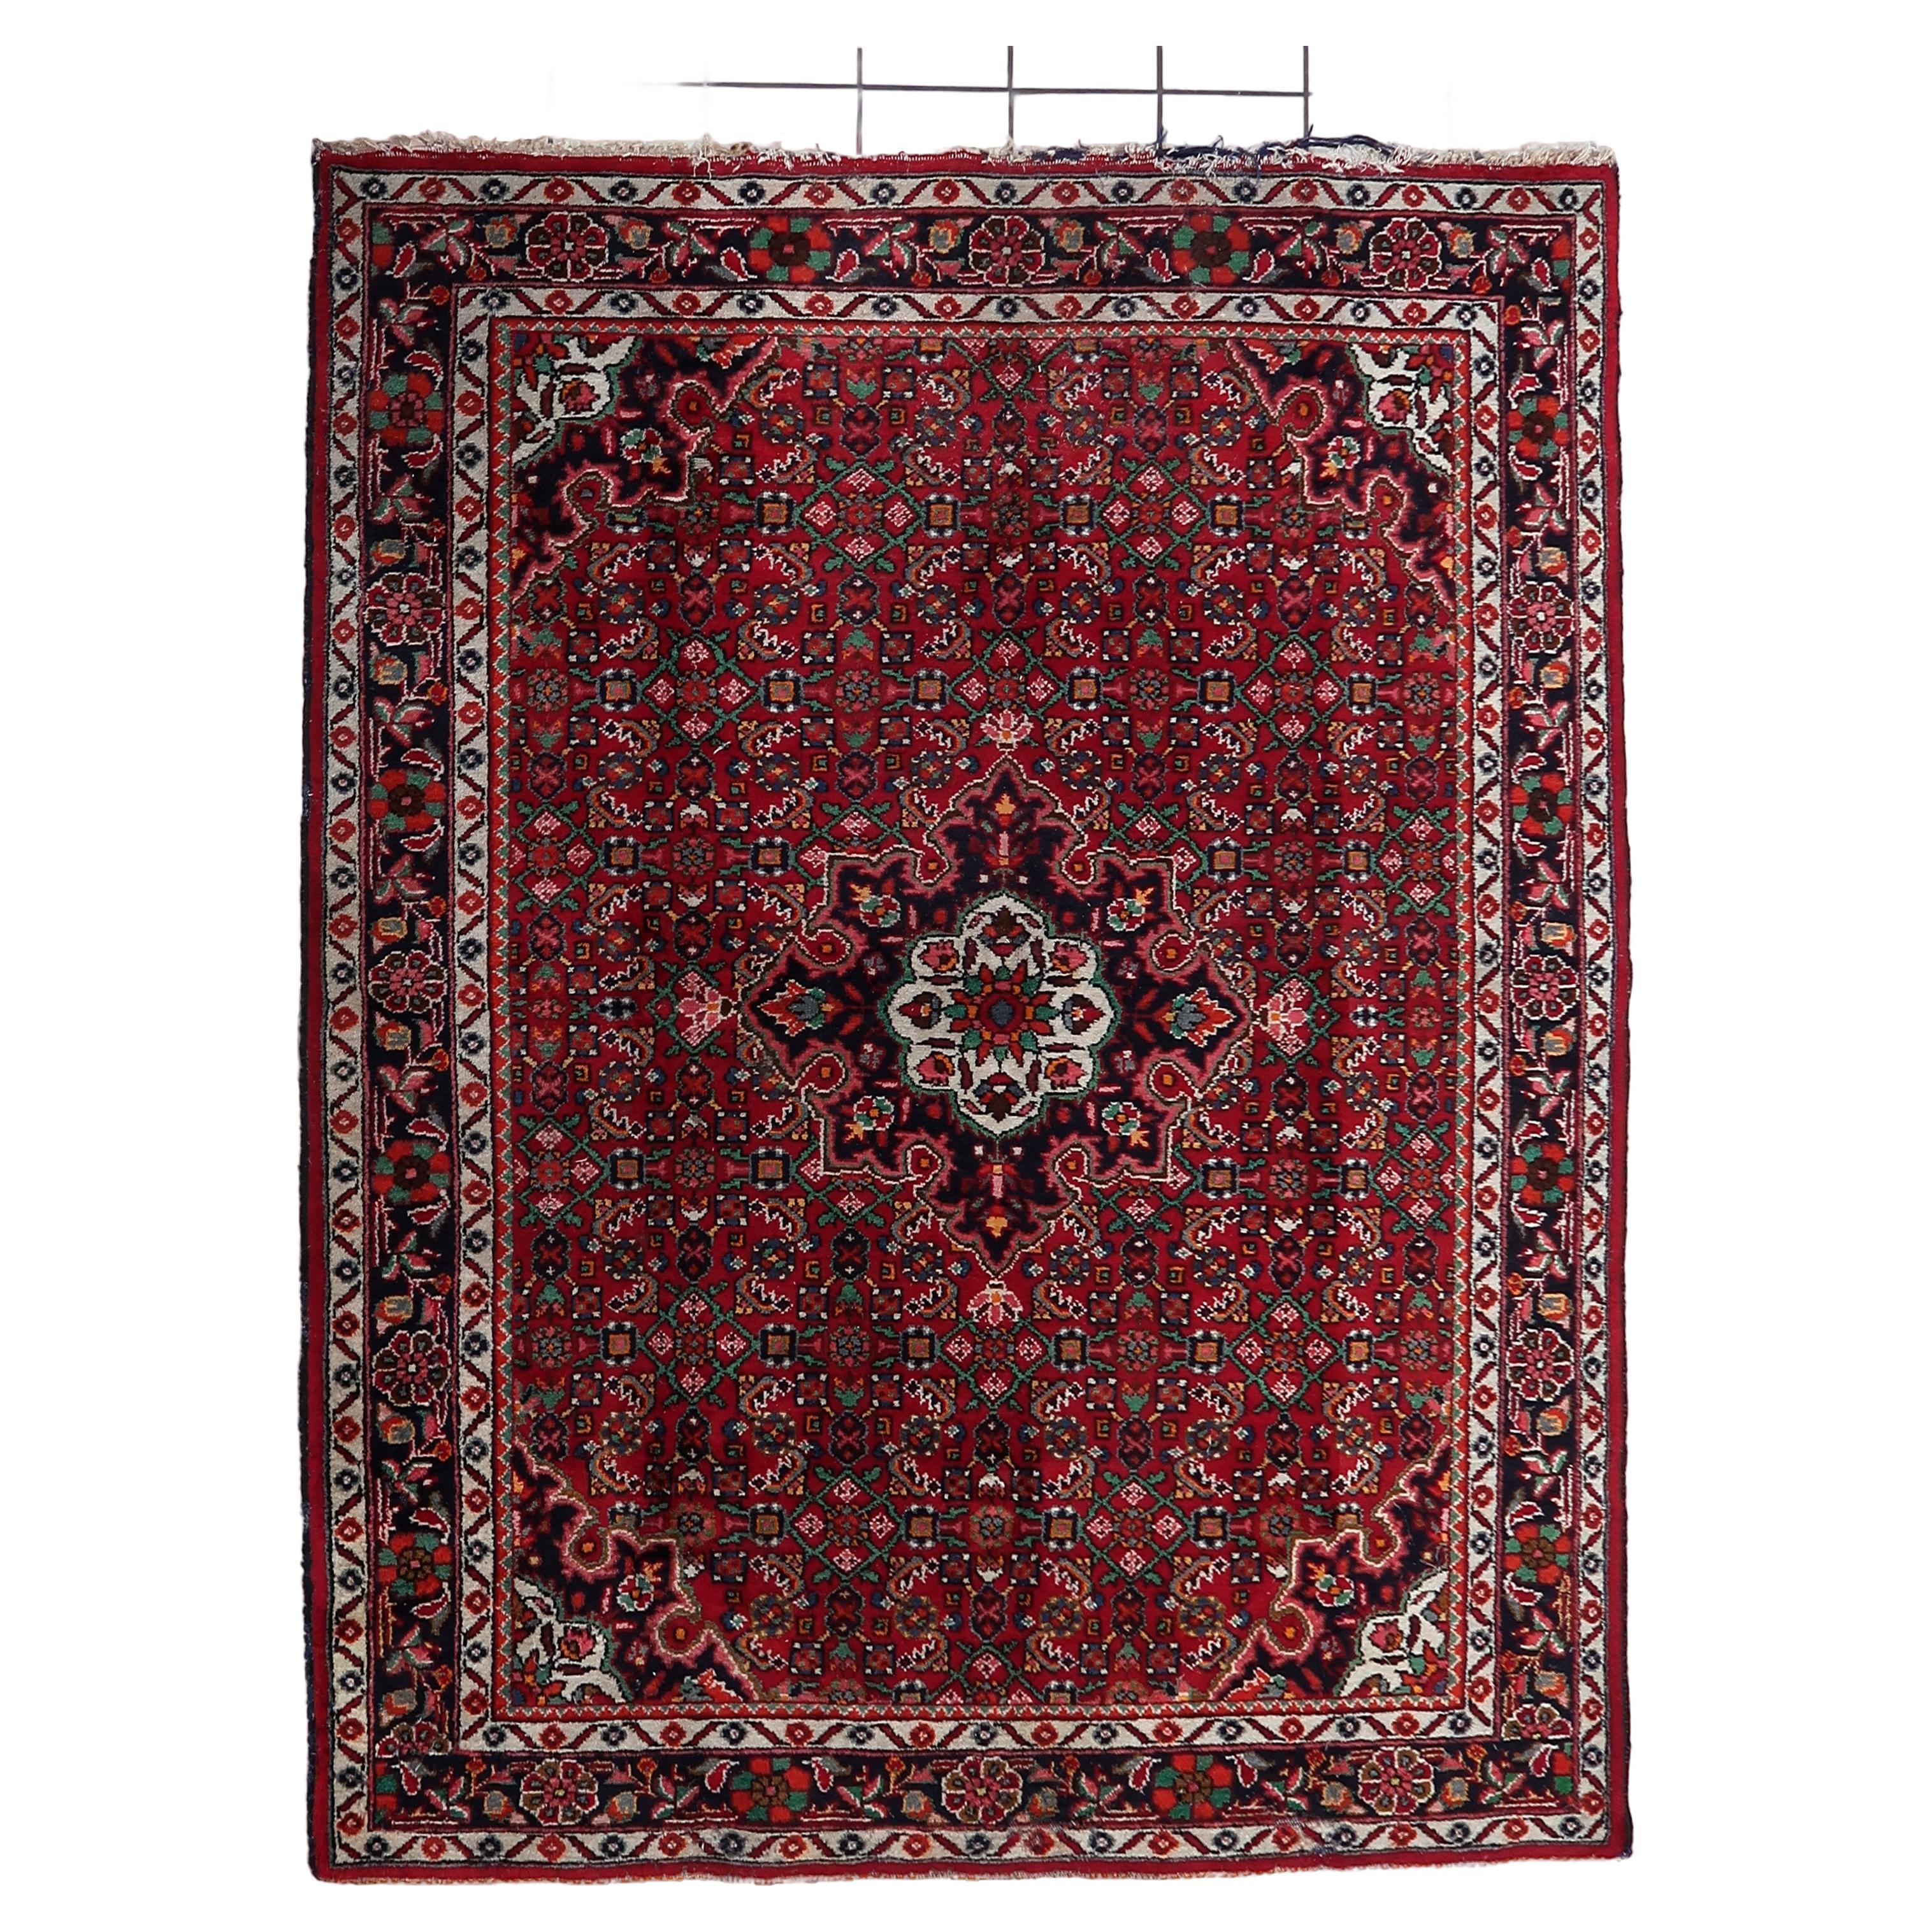 Handmade Vintage Persian Malayer Rug 5.4' x 7.1' (167cm x 219cm), 1960s - 1C1110 For Sale